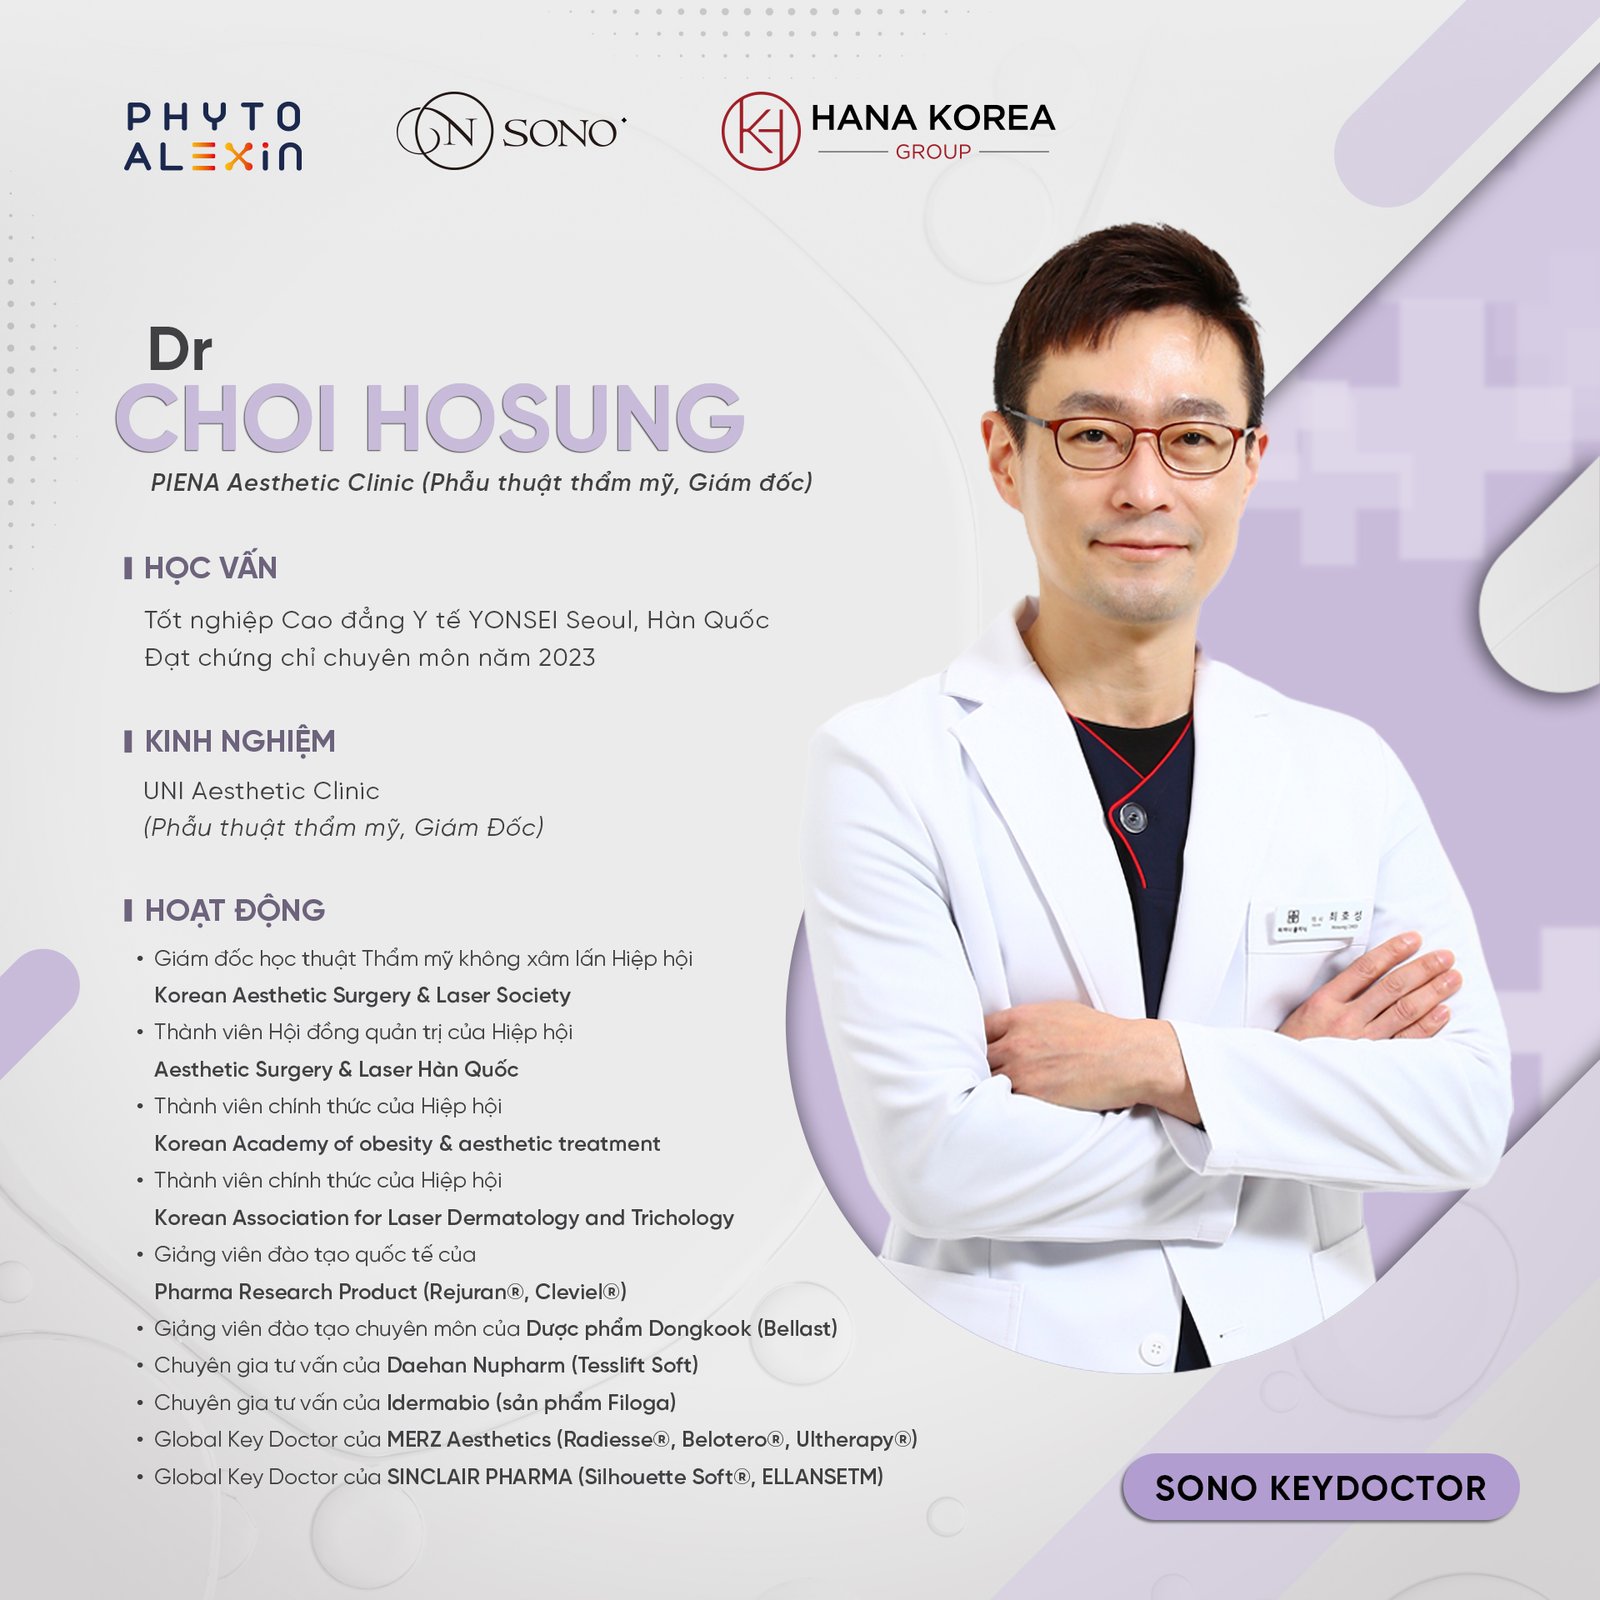 MD. Choi HoSung